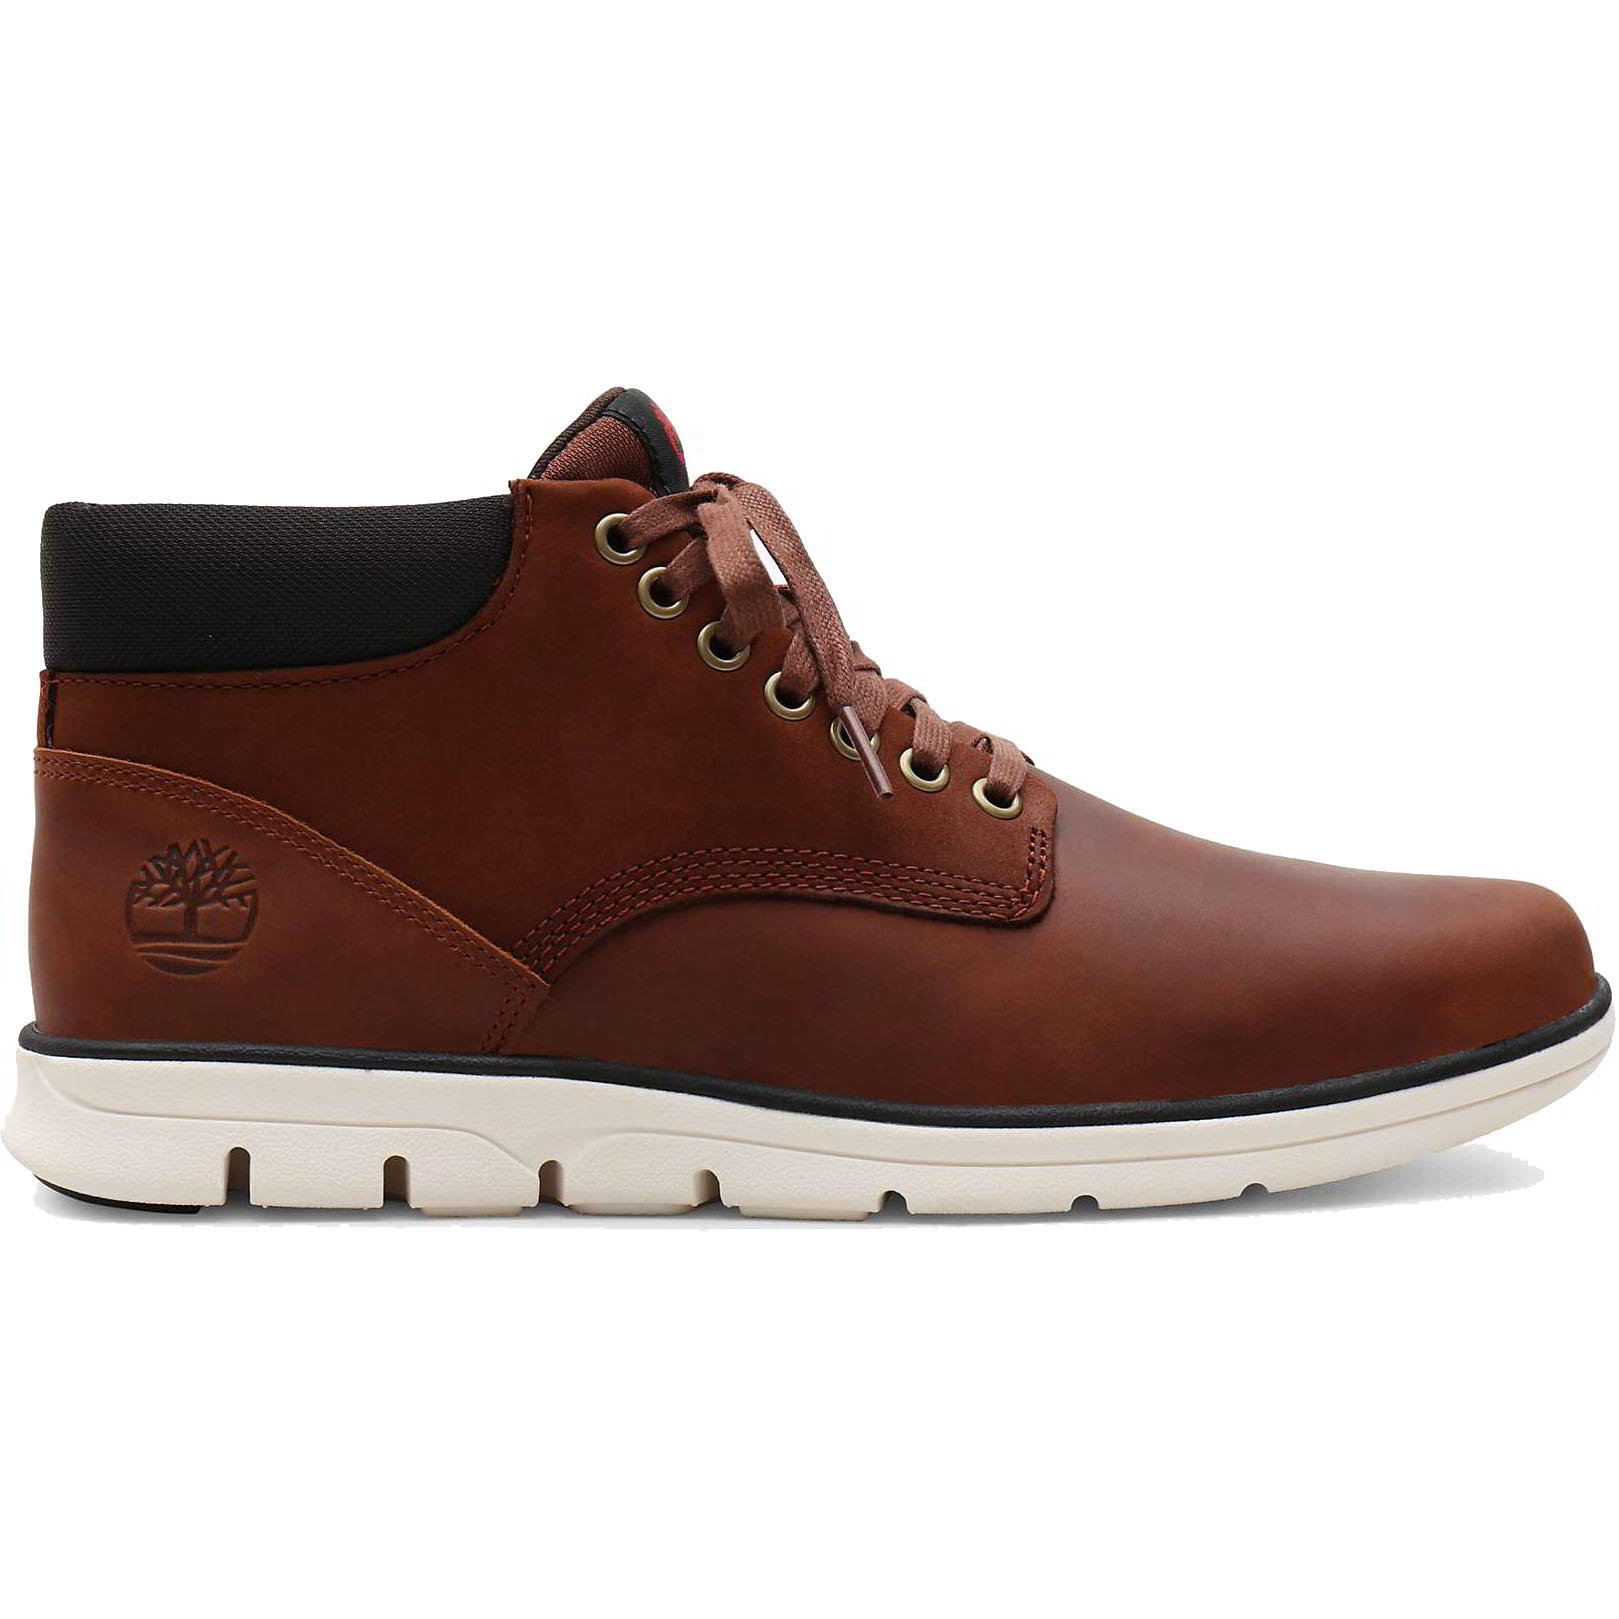 Timberland Men's Bradstreet Chukka Leather Ankle Boots - UK 8